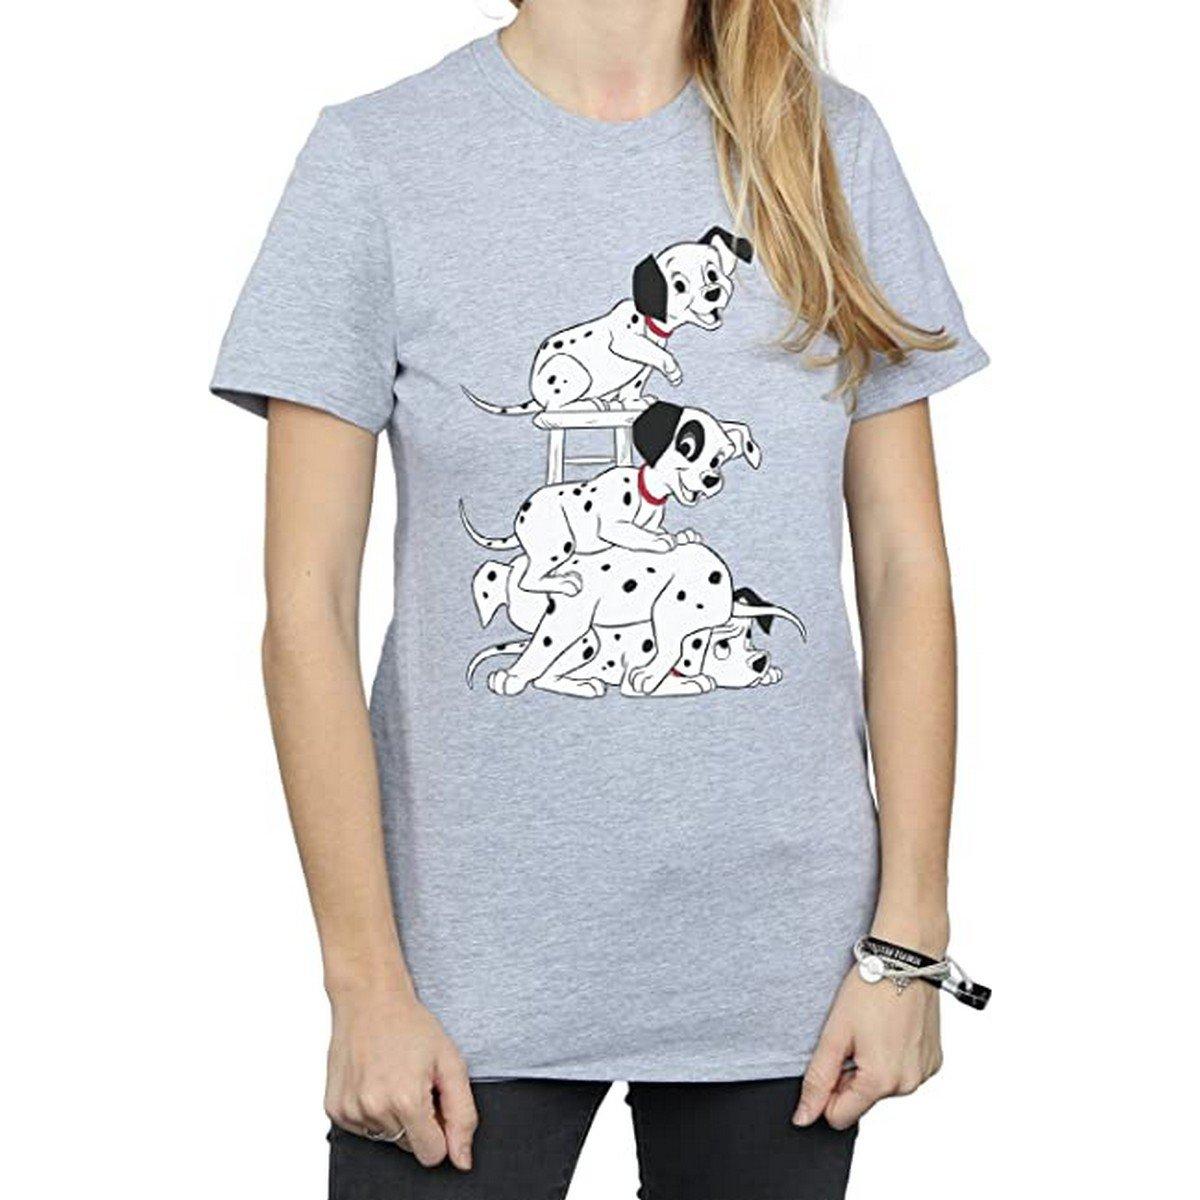 101 Dalmatians Tshirt Femme Gris XL